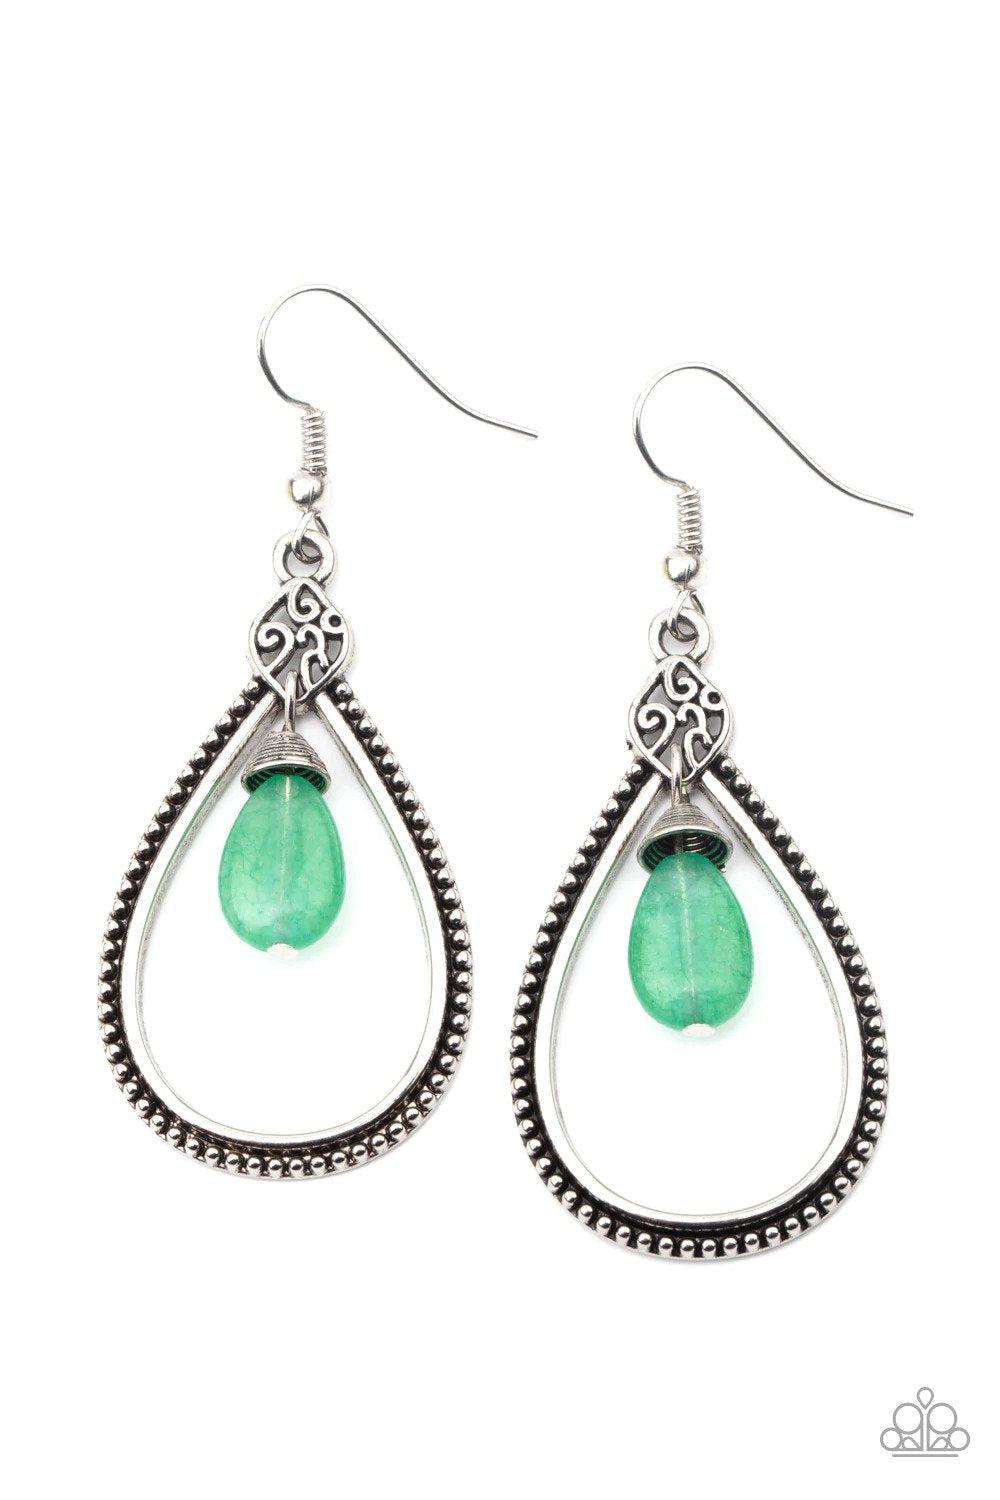 I'll Believe It ZEN I See It Green Earrings - Paparazzi Accessories- lightbox - CarasShop.com - $5 Jewelry by Cara Jewels